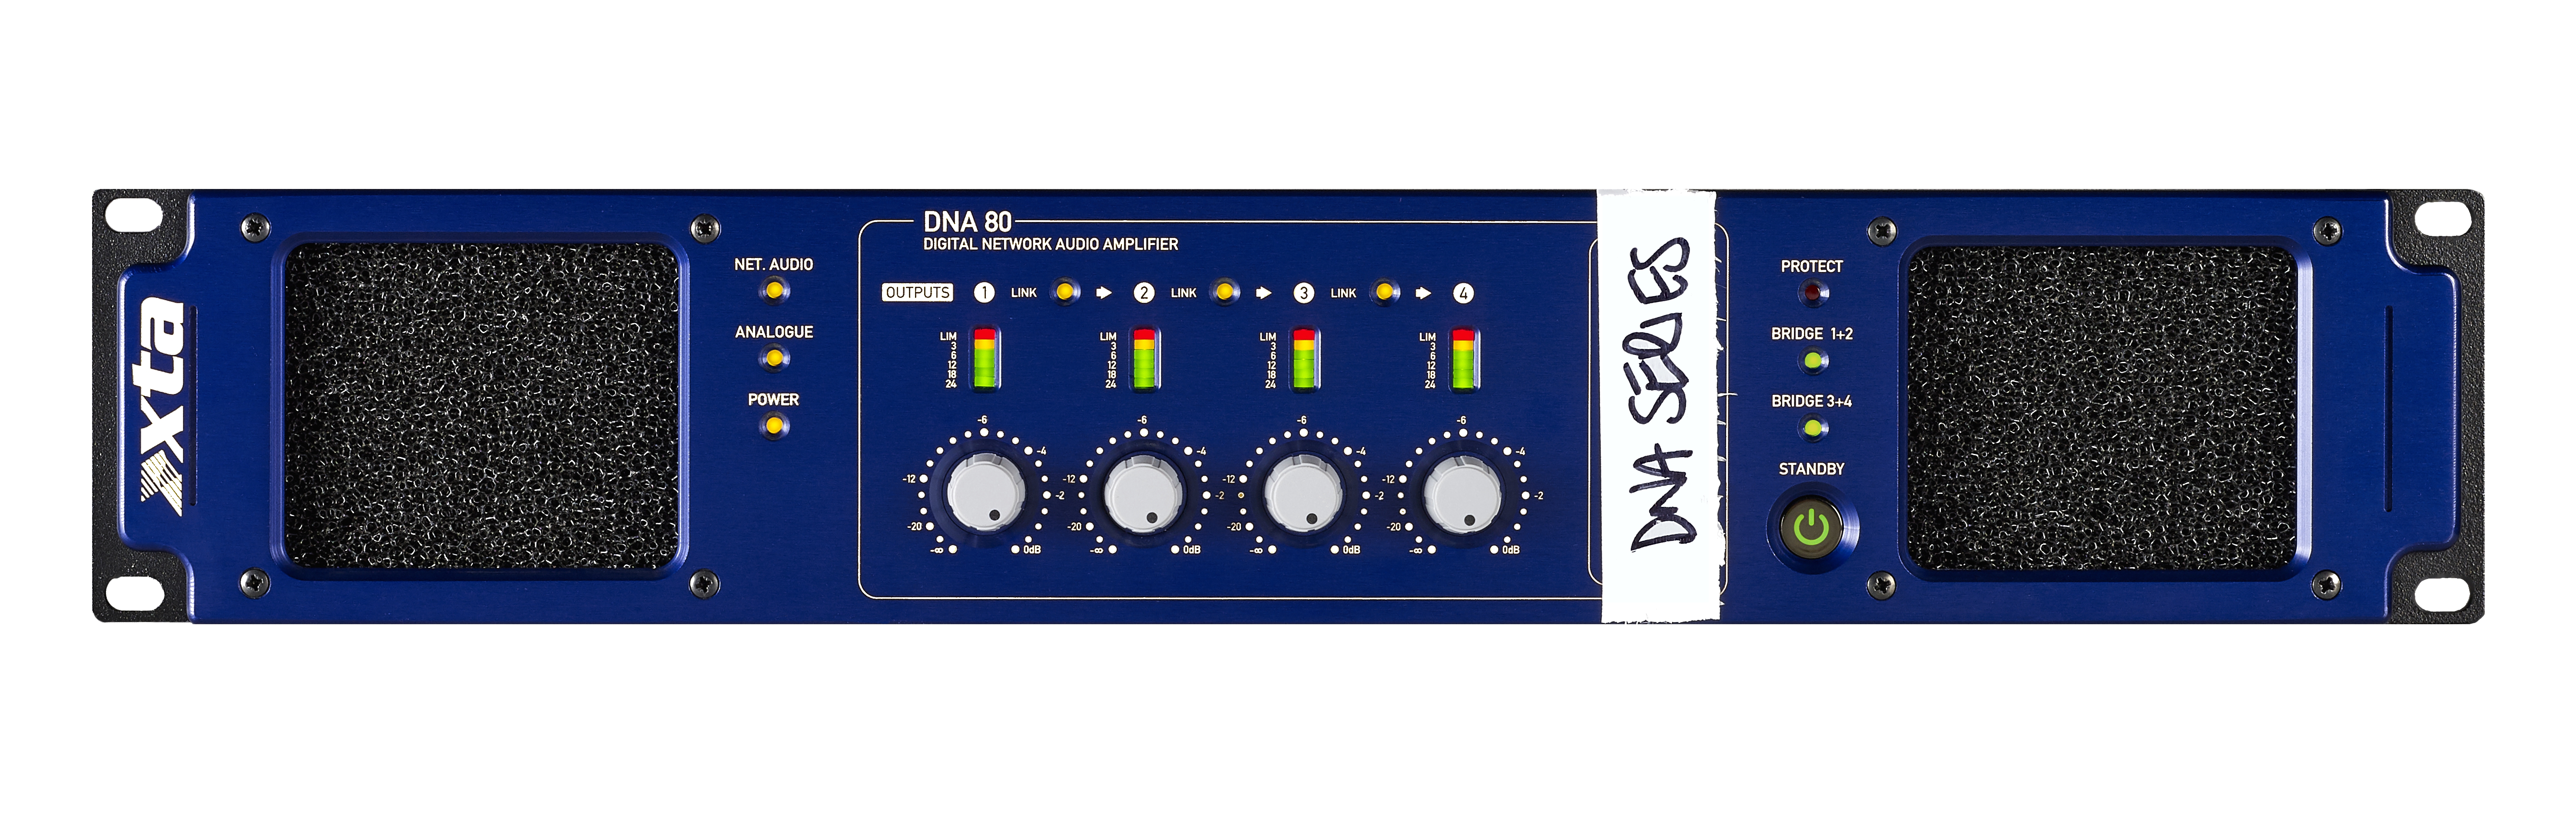 DNA80